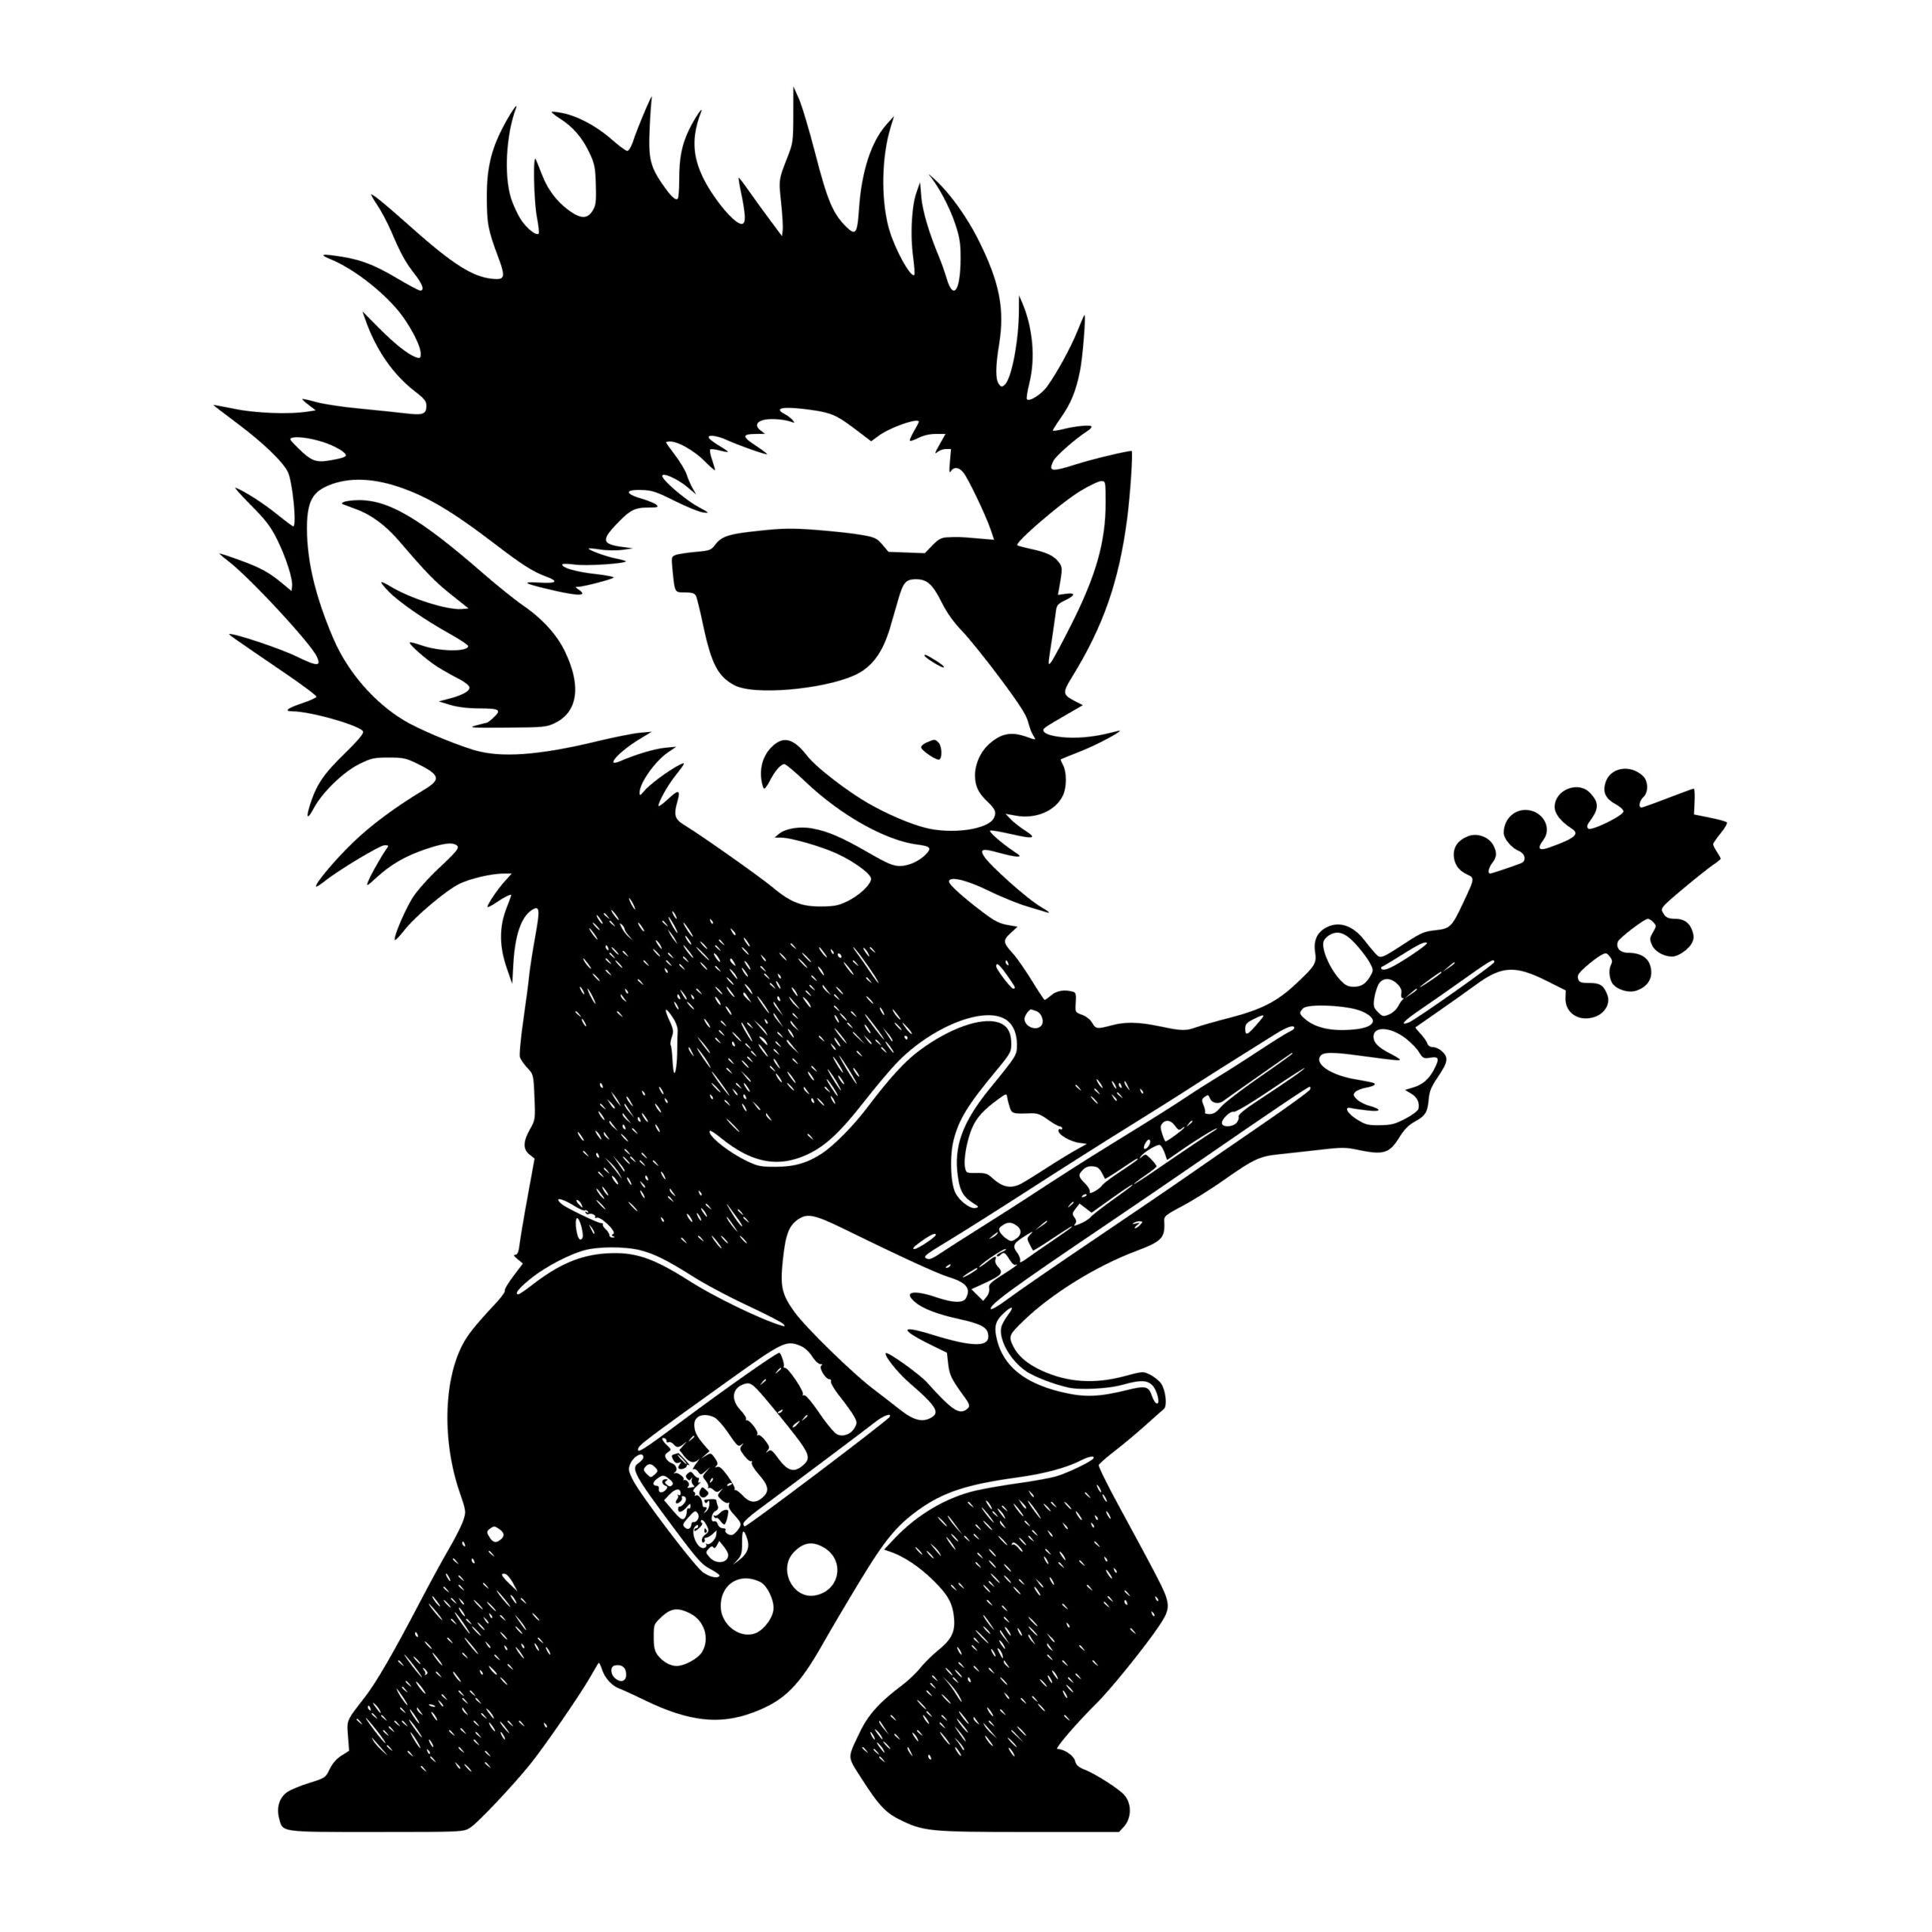 Opossum Rockstar: SVG File for Cricut, Silhouette, Laser Machines